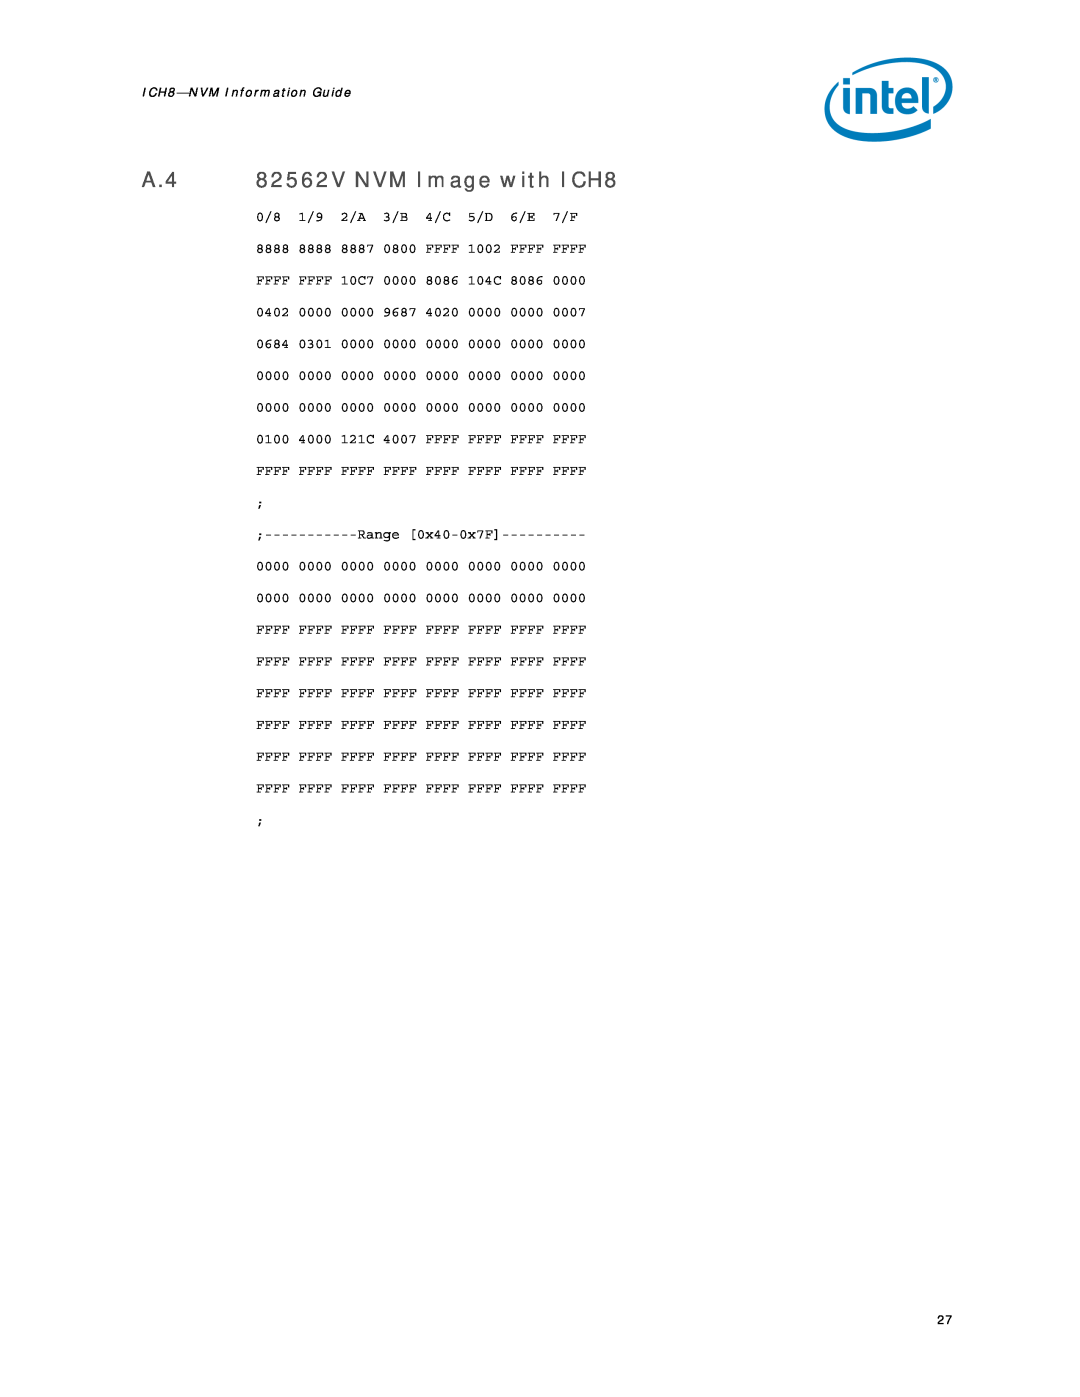 Intel 8 LAN manual A.4 82562V NVM Image with ICH8 